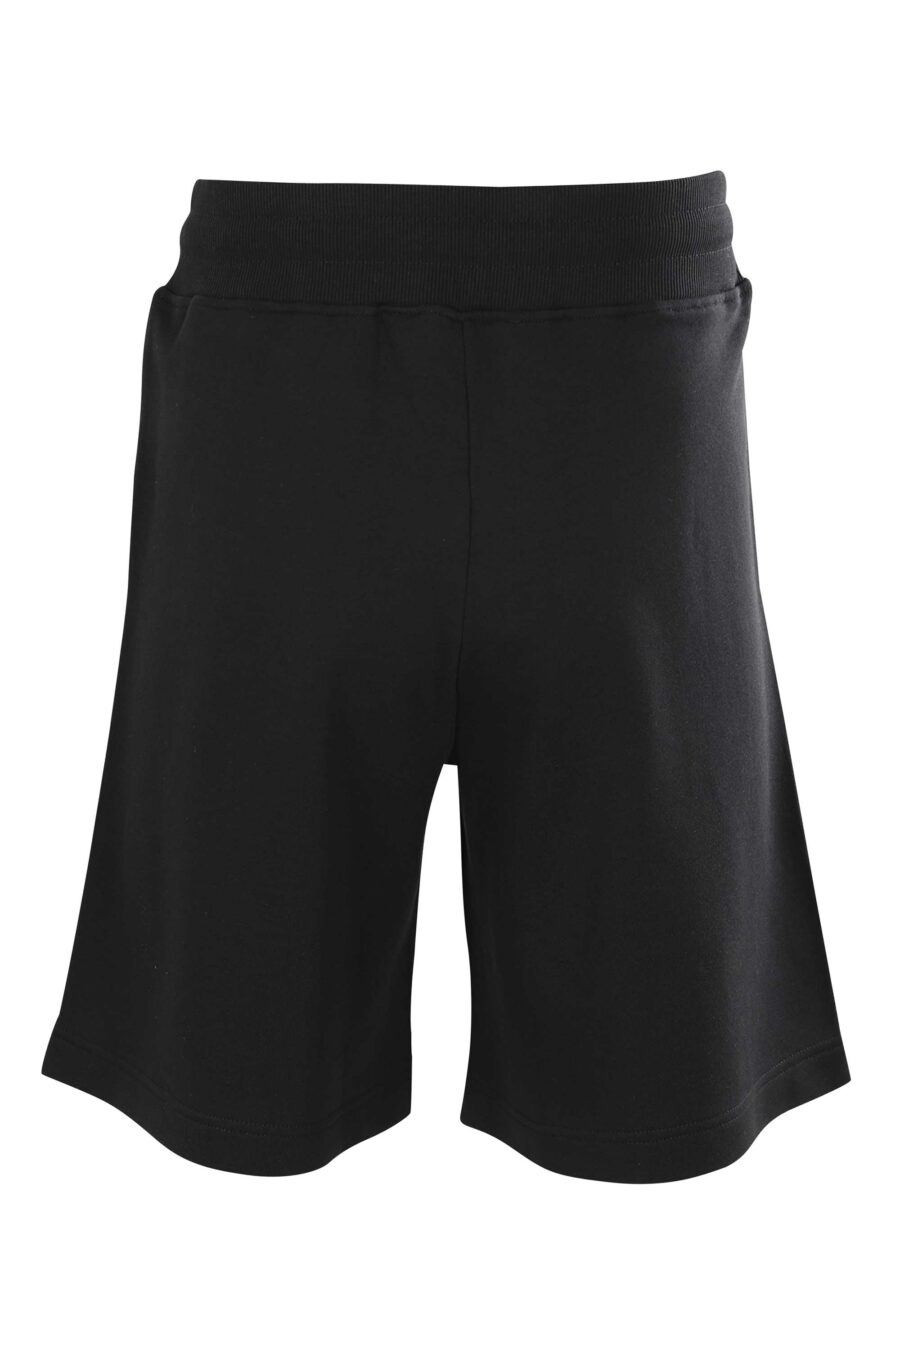 Jogginghose schwarz mit rundem Mini-Logo - 8052019230420 3